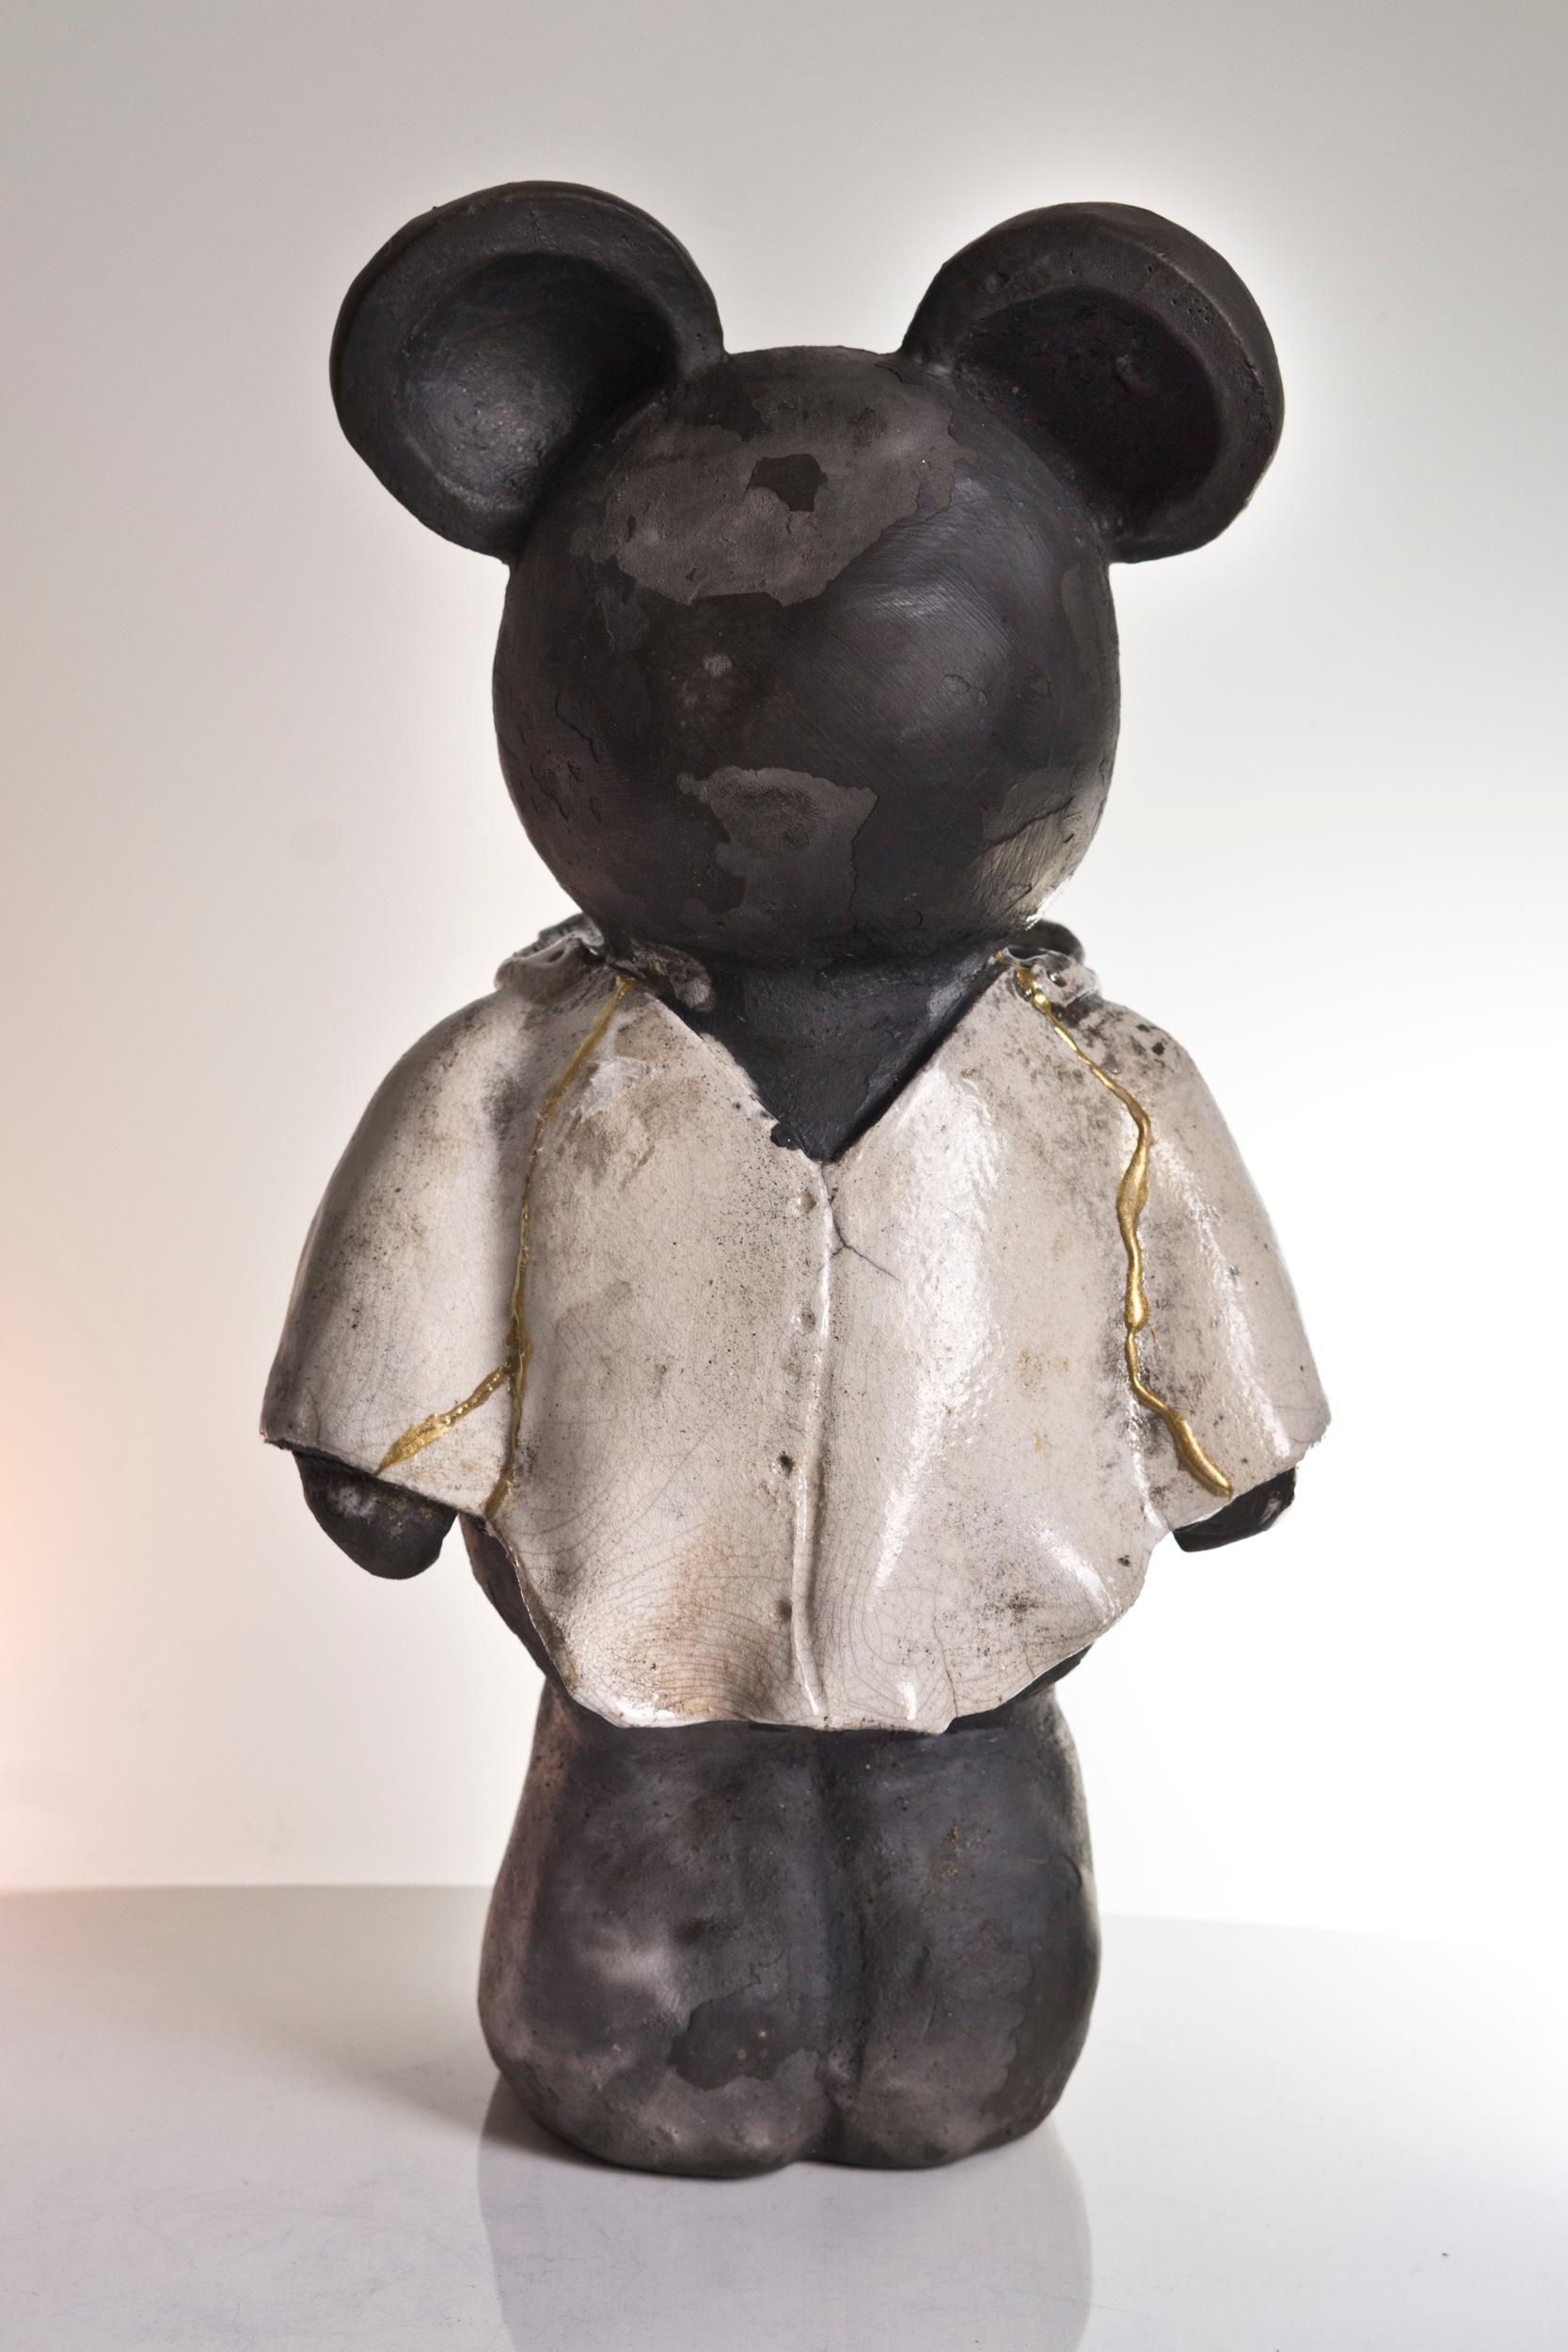 Agustina Garrigou Figurative Sculpture - The Lonely Teddy